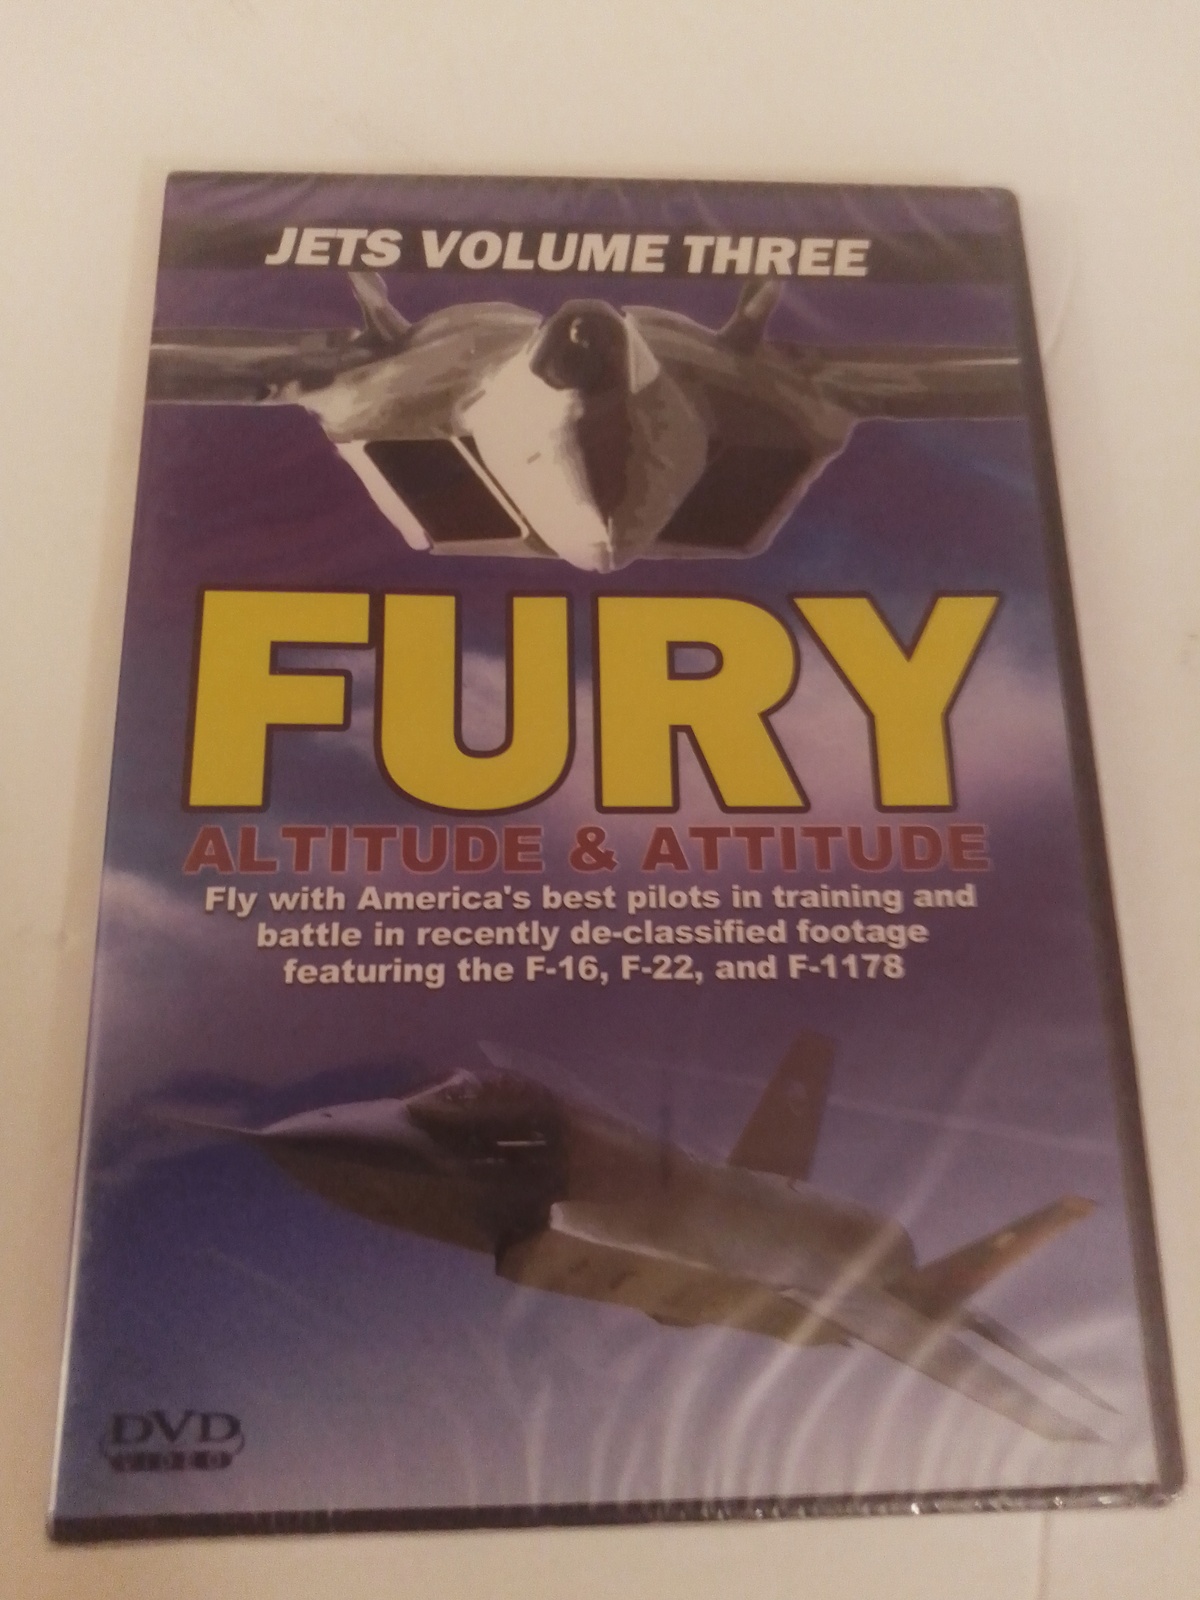 Jets Volume Three Fury Altitude & Attitude DVD 1998 Region Free Slim Case New - $9.99